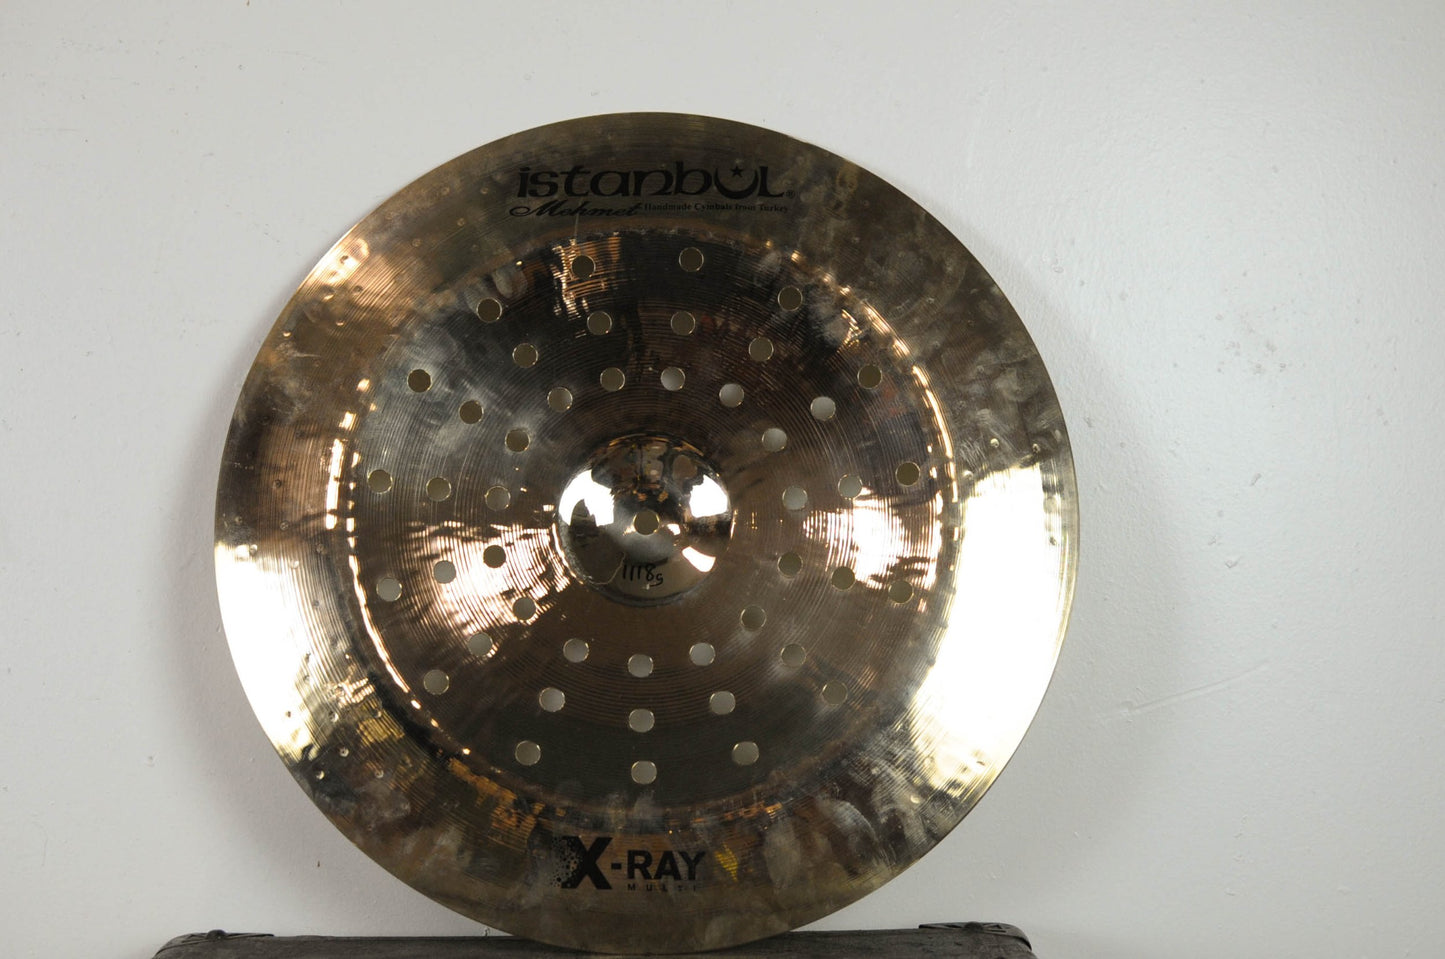 Istanbul Mehmet X-Ray 18" China Cymbal 1118g